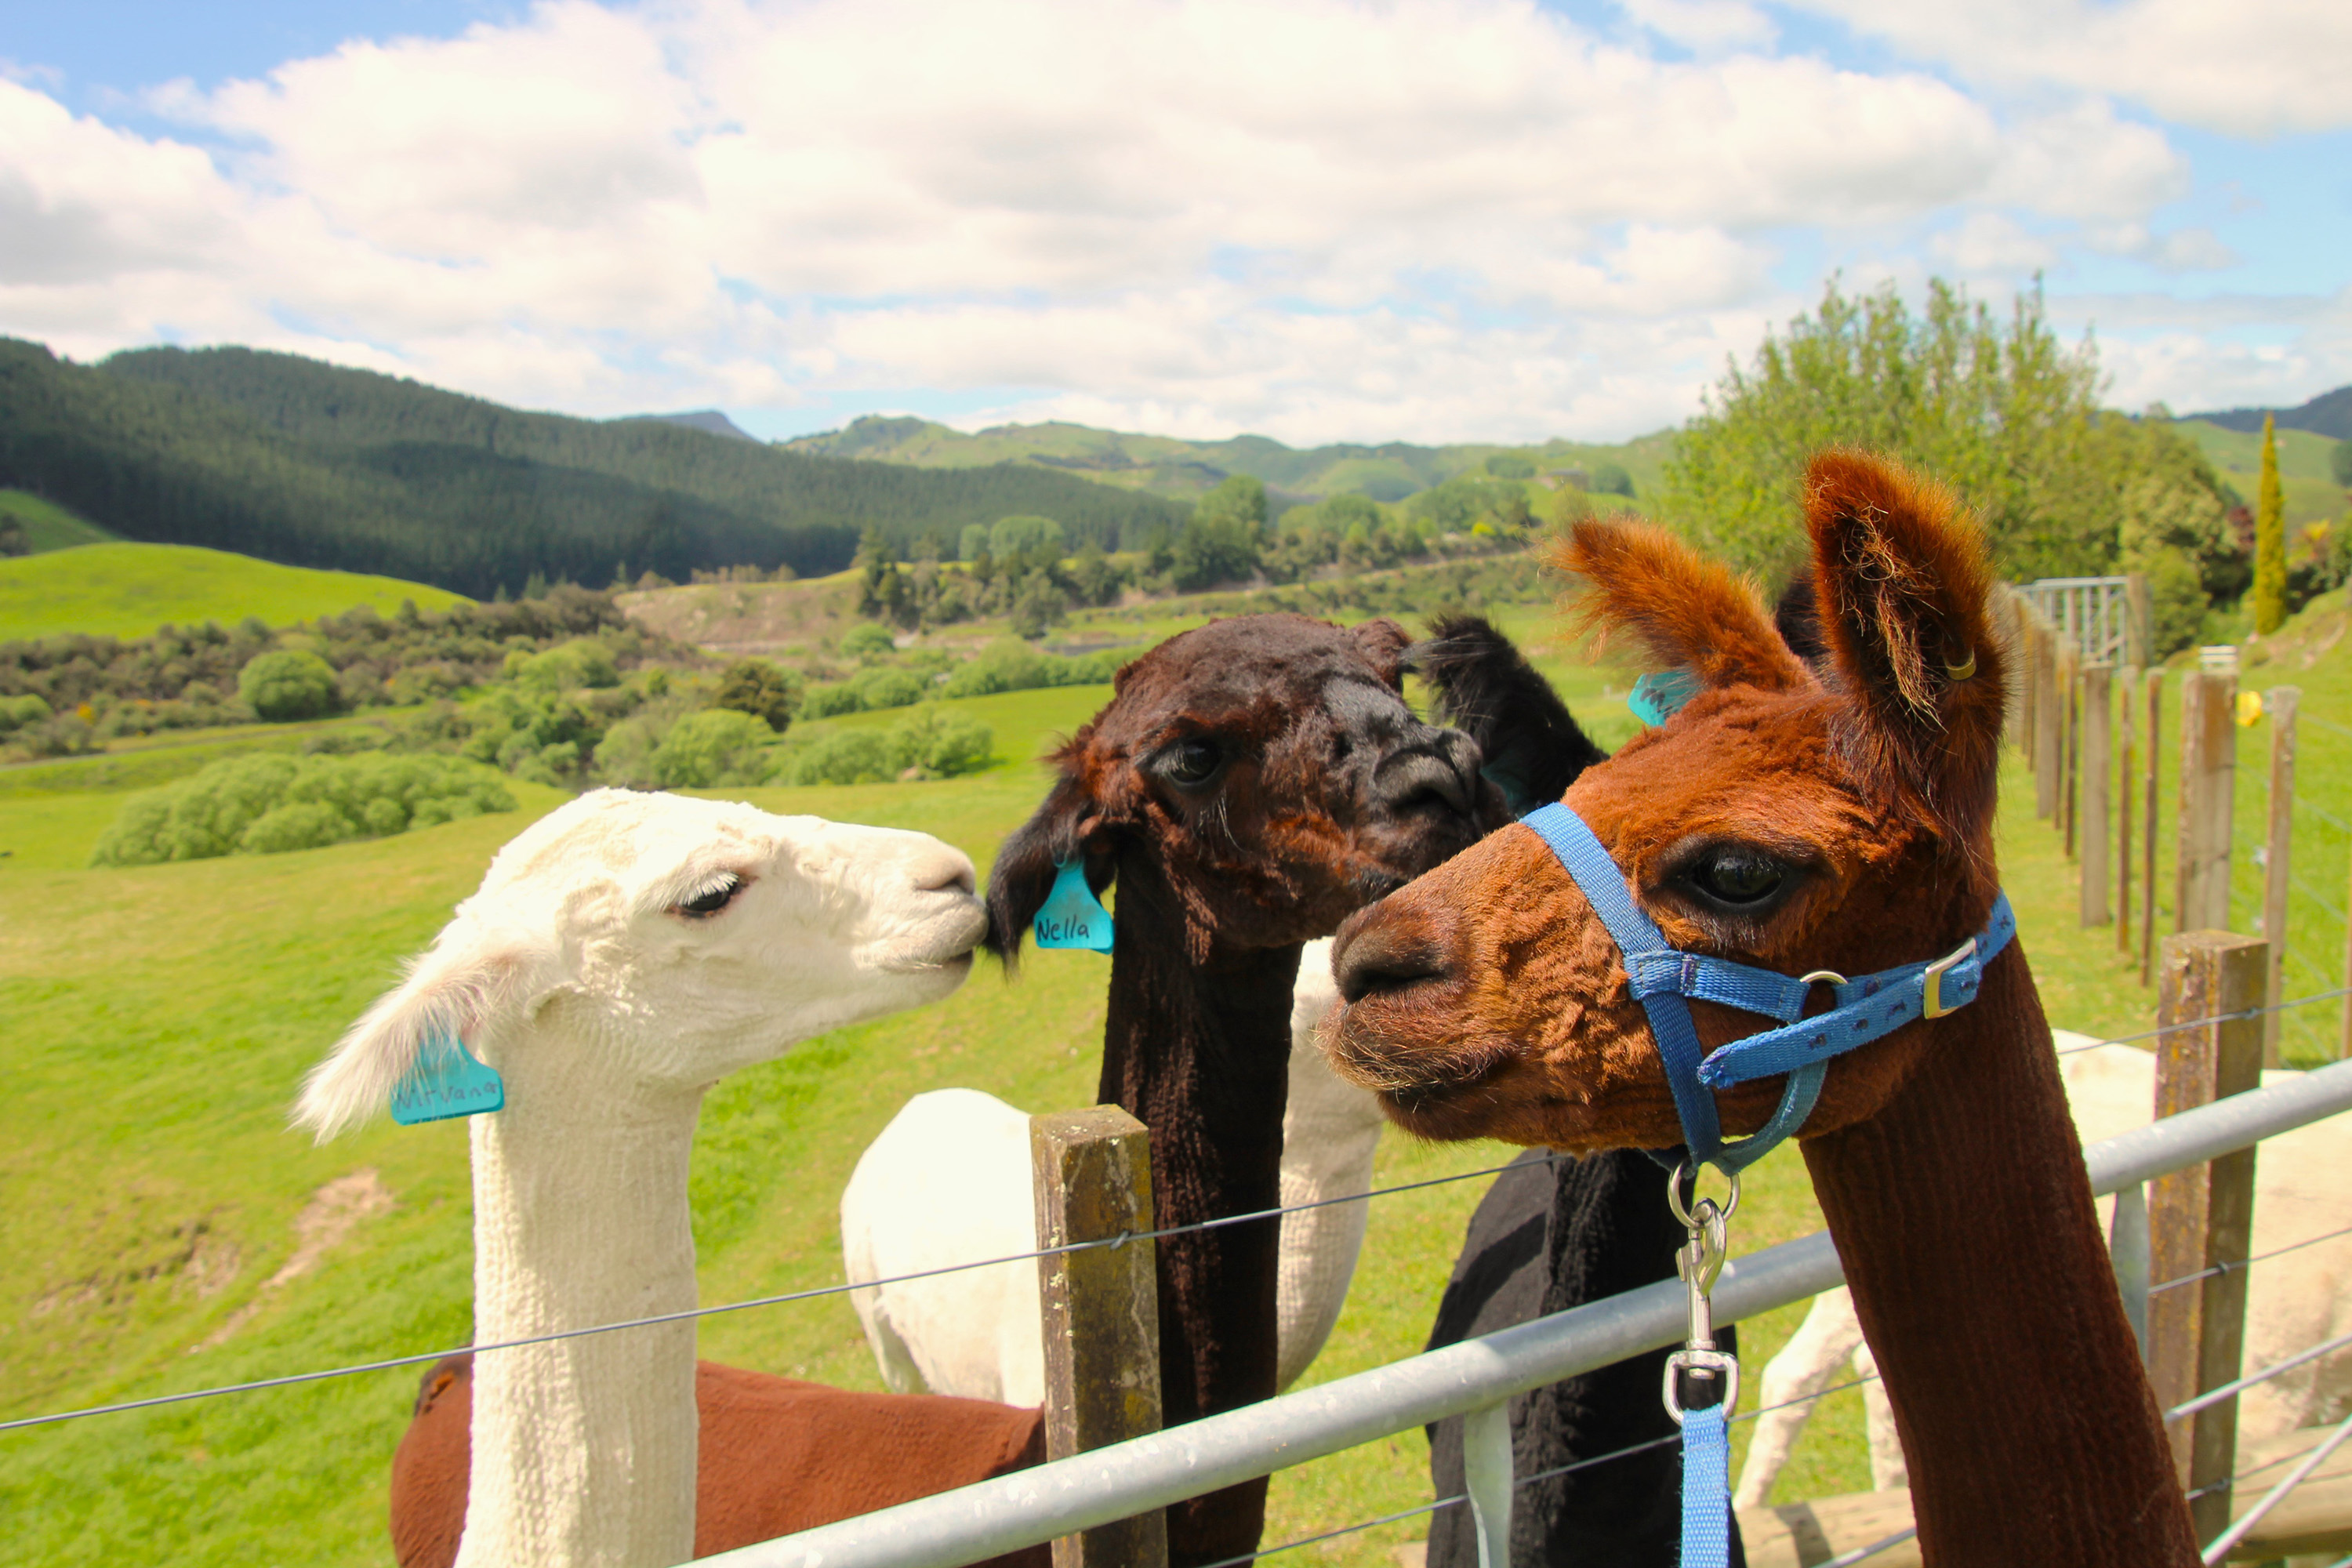 Nirvana, Nella and Musty, resident alpacas at Nevalea Alpacas